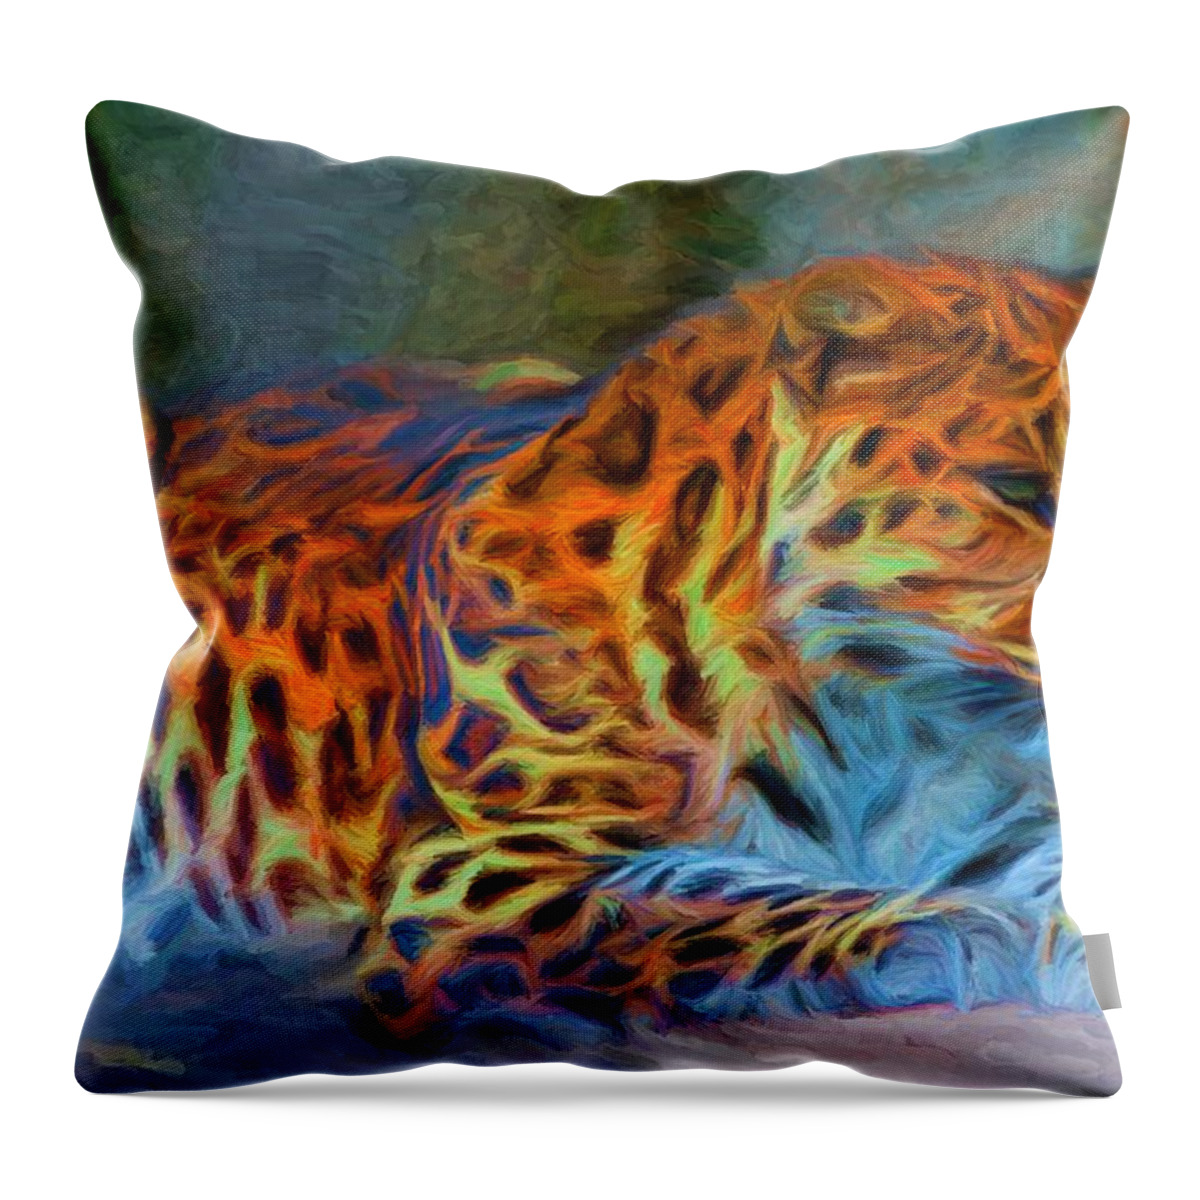 Amur Leopard Throw Pillow featuring the digital art Amur Leopard by Caito Junqueira